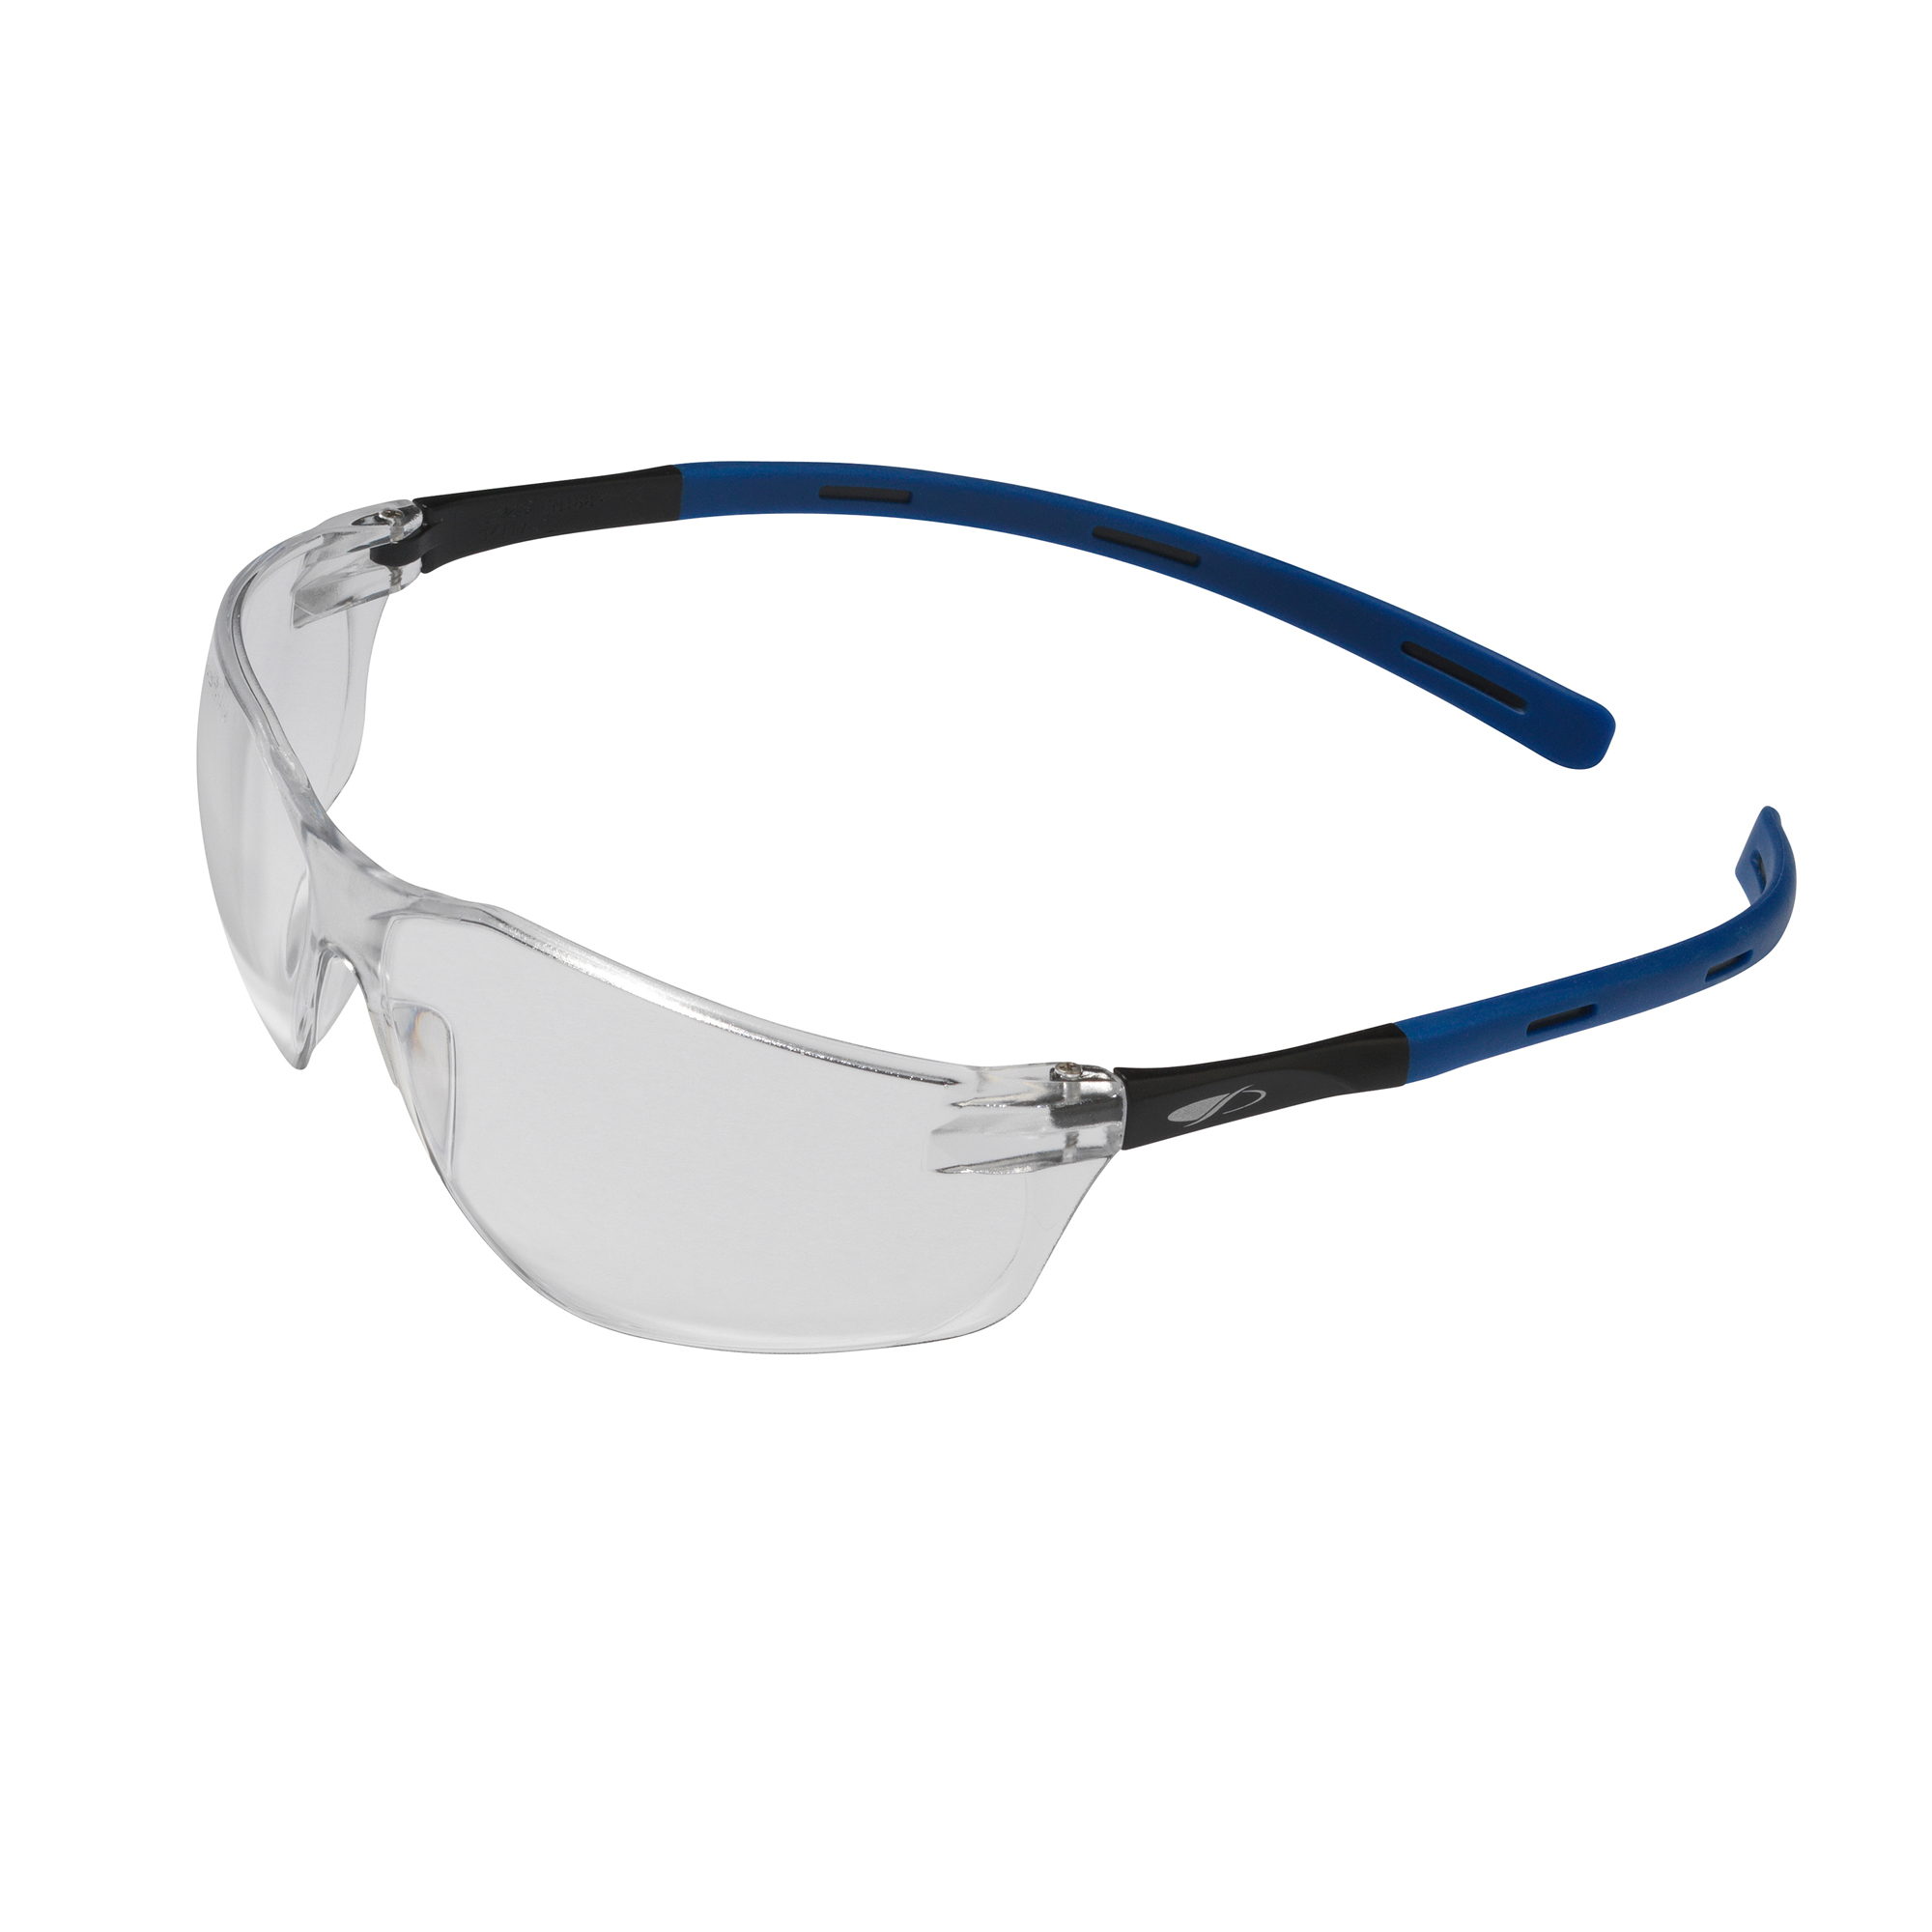 Rigi™ Lightweight Safety Specs - Clear UV385 Lenses - Black/Blue Frames